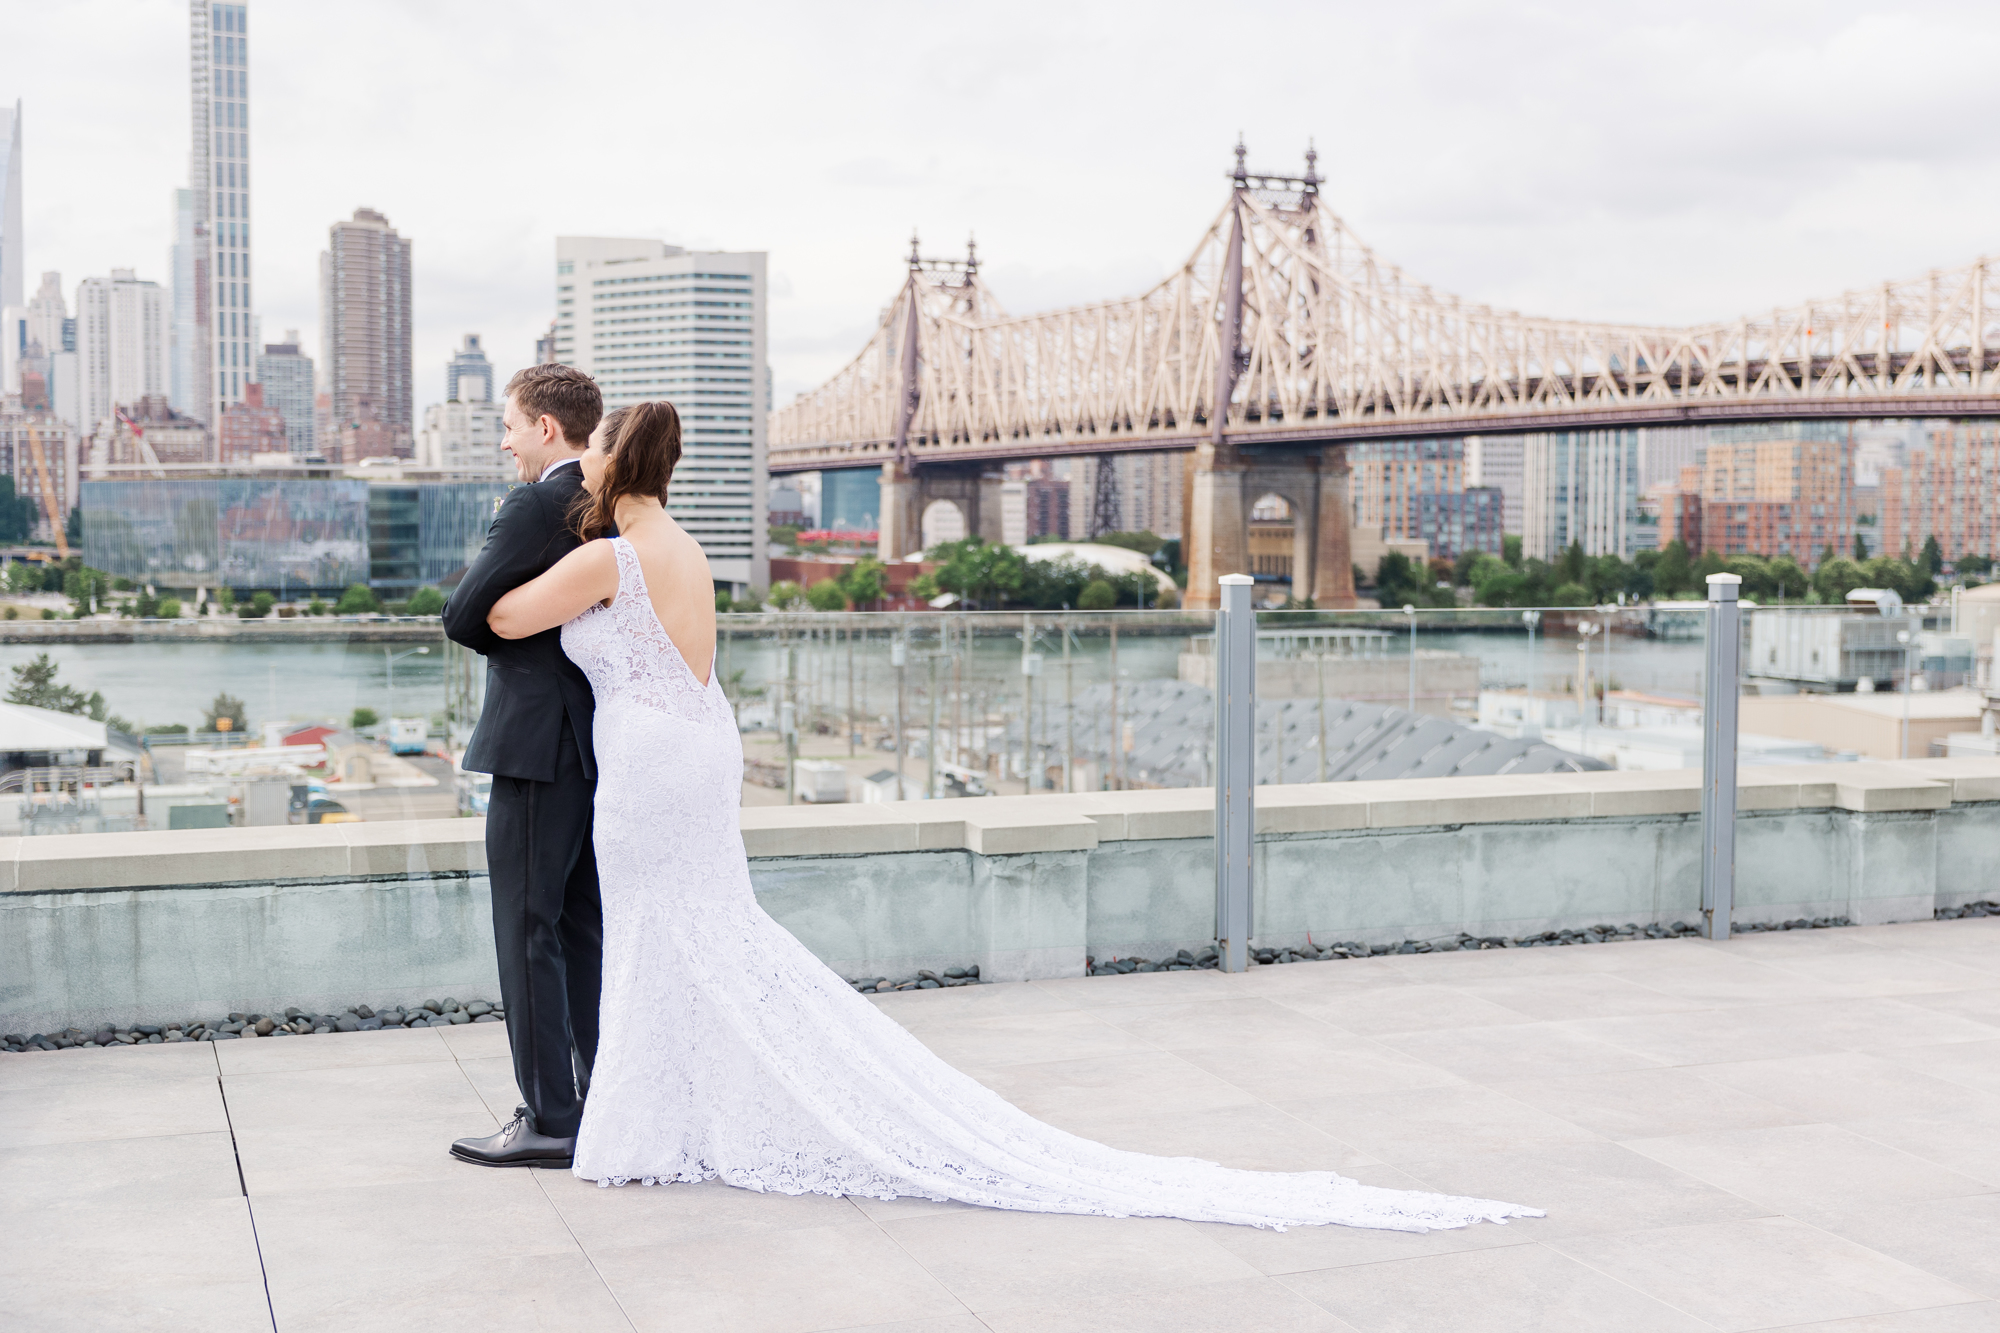 Magical Bordone Wedding Photos in Long Island City with NYC Skyline